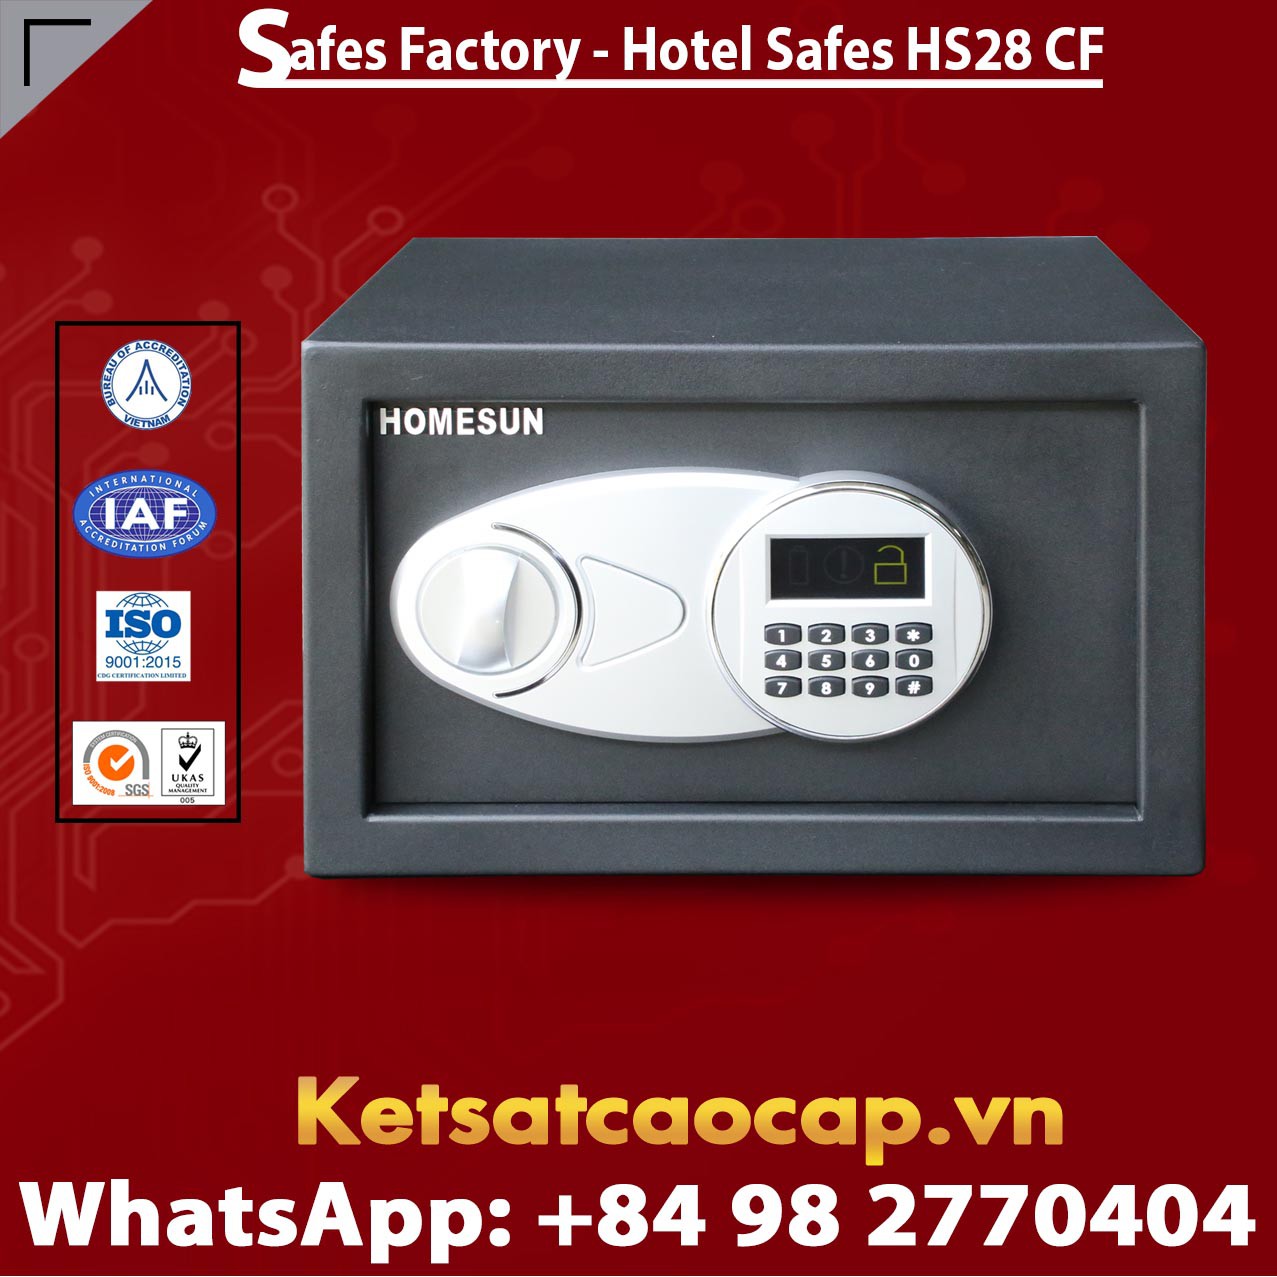 Hotel Safety Deposit Box HOMESUN HS28 CF